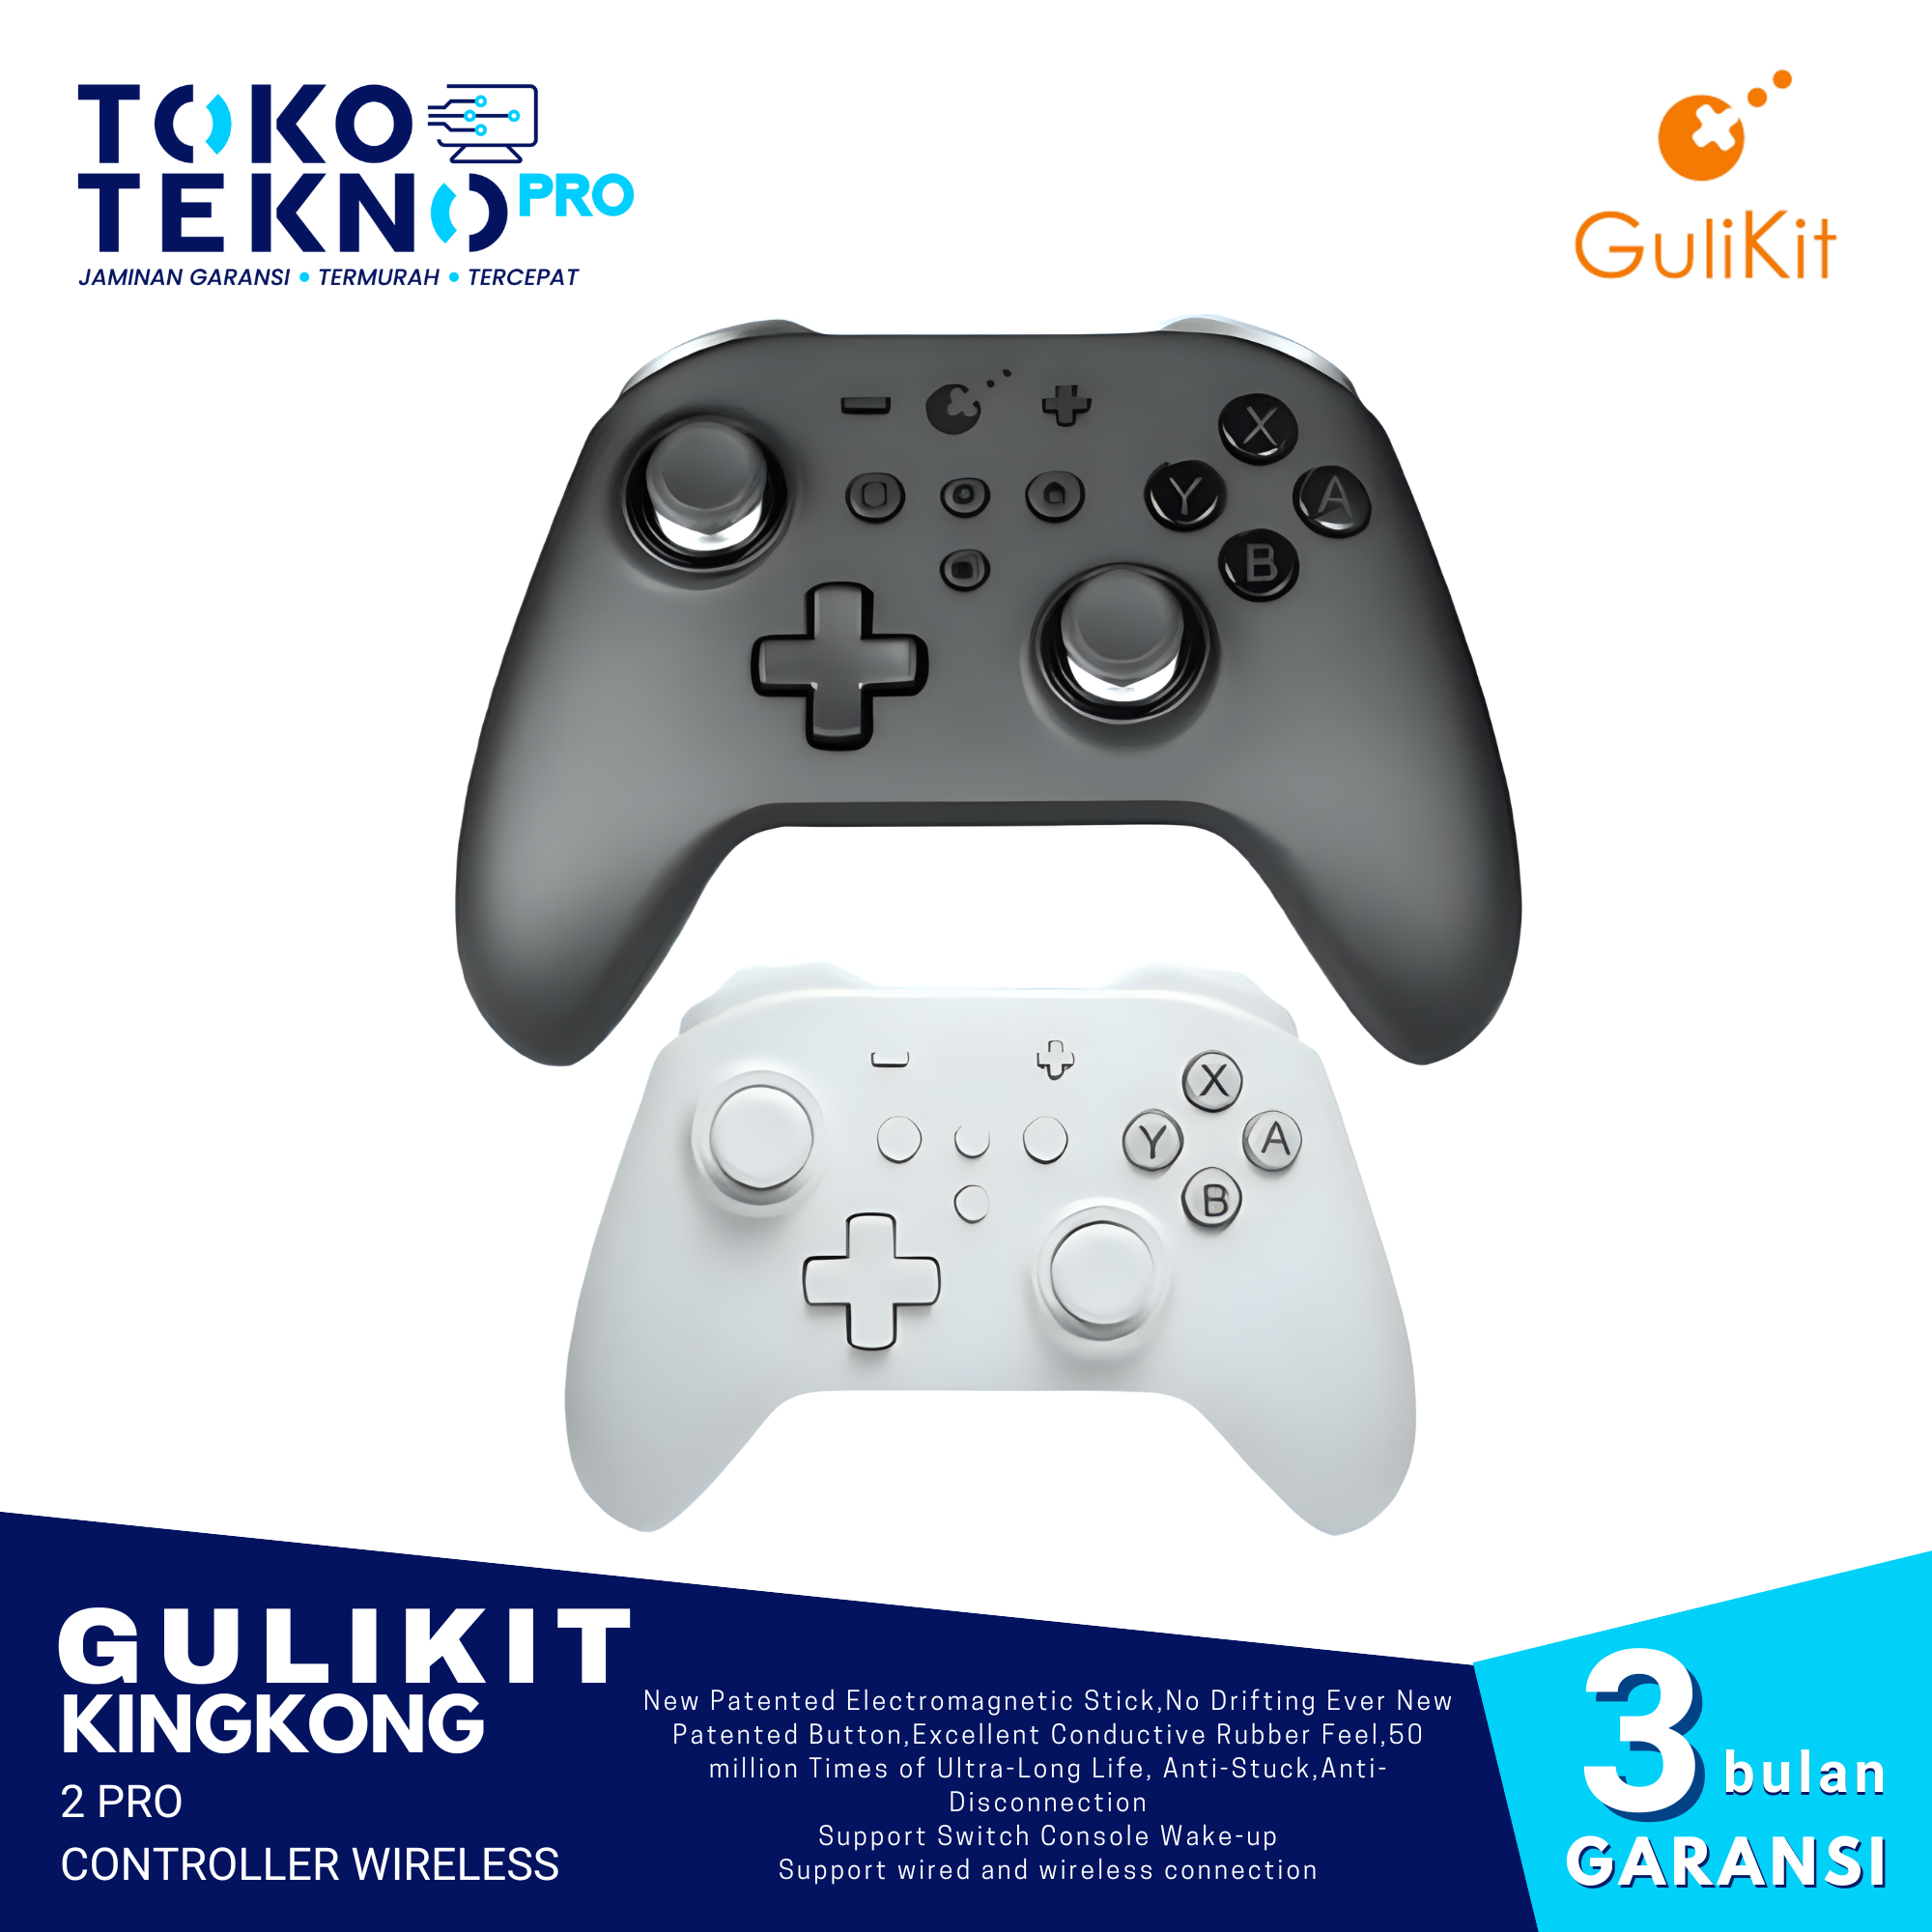 Gulikit Kingkong 2 Pro NS09 Controller Wireless Nintendo Switch WinMac